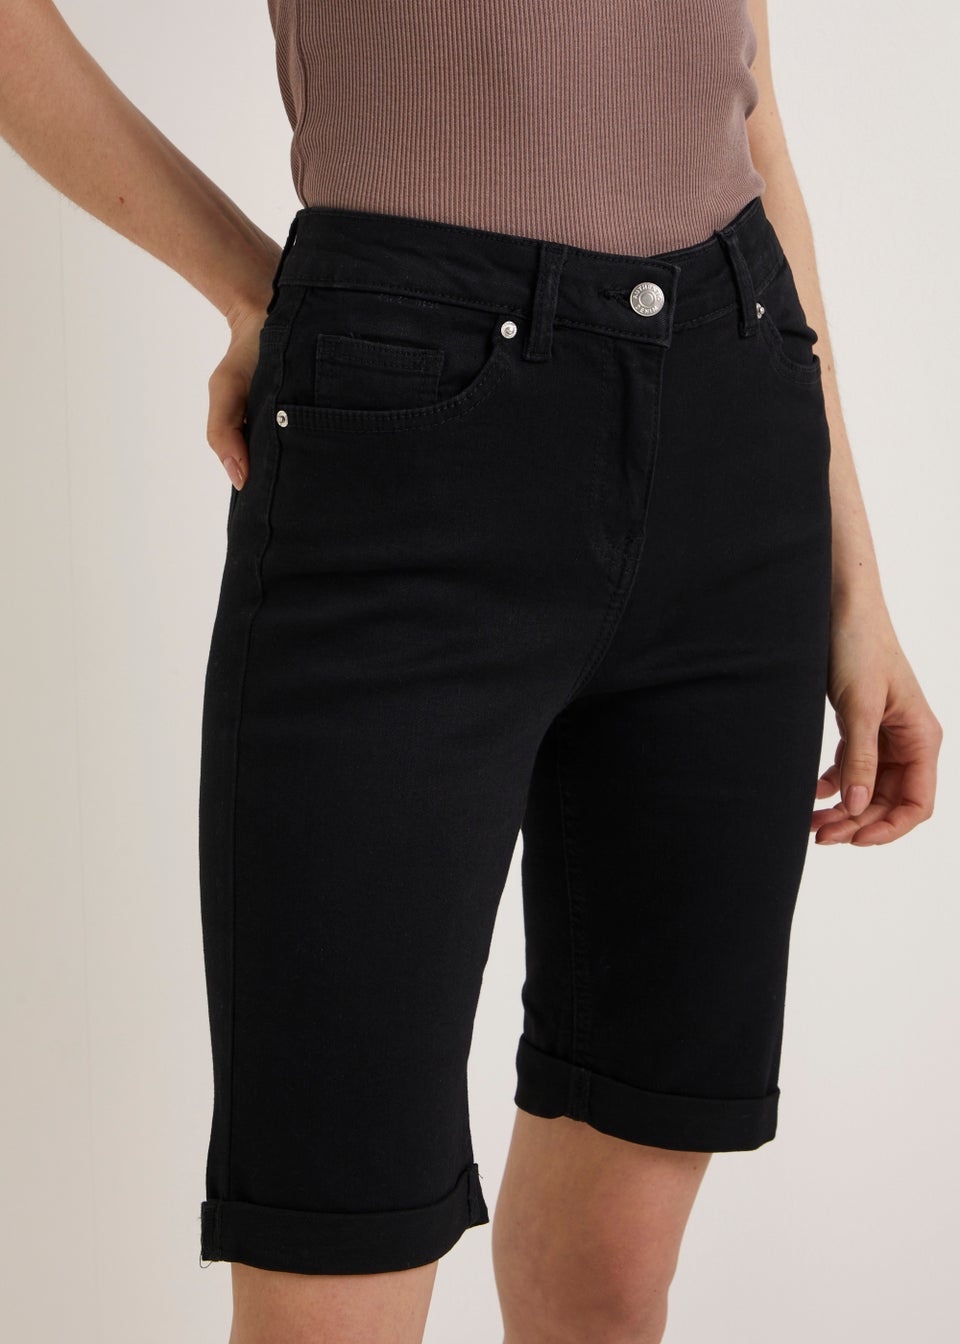 Buy Bold N Elegant Girls Heart Polka Dot Print Knee Length Denim Capri  Shorts for Toddler Tween Young Girls at Amazonin